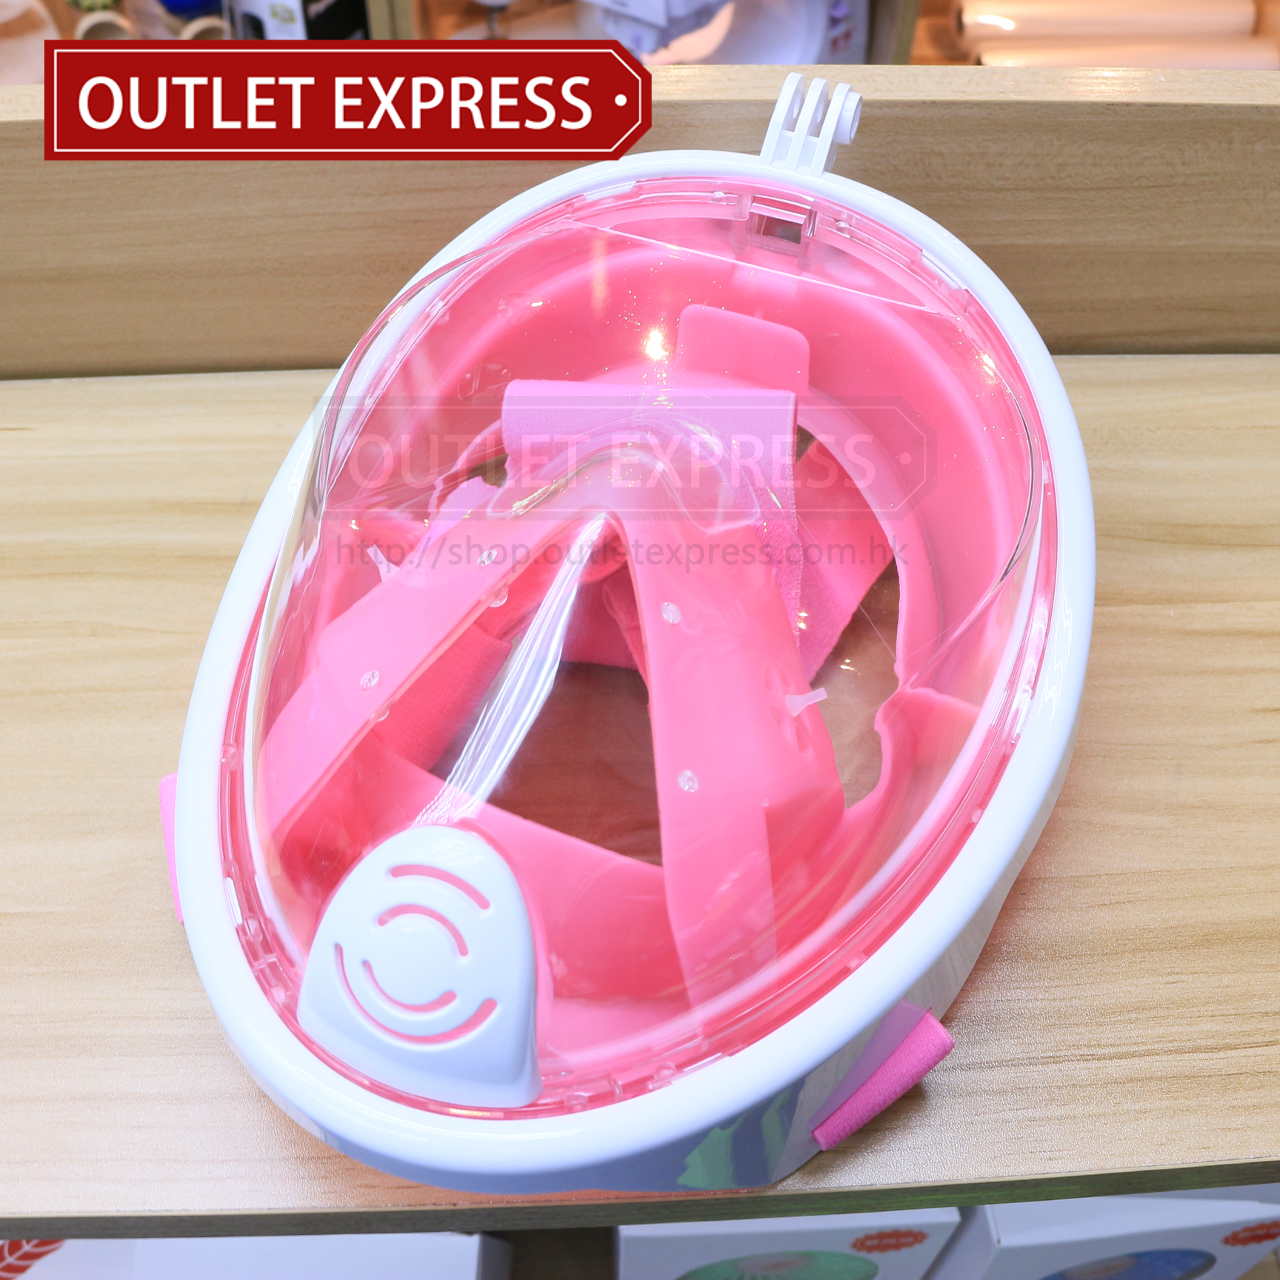 DRY DOP 全乾式浮潛潛水面罩(粉紅色)- Outlet Express HK生活百貨城實拍相片